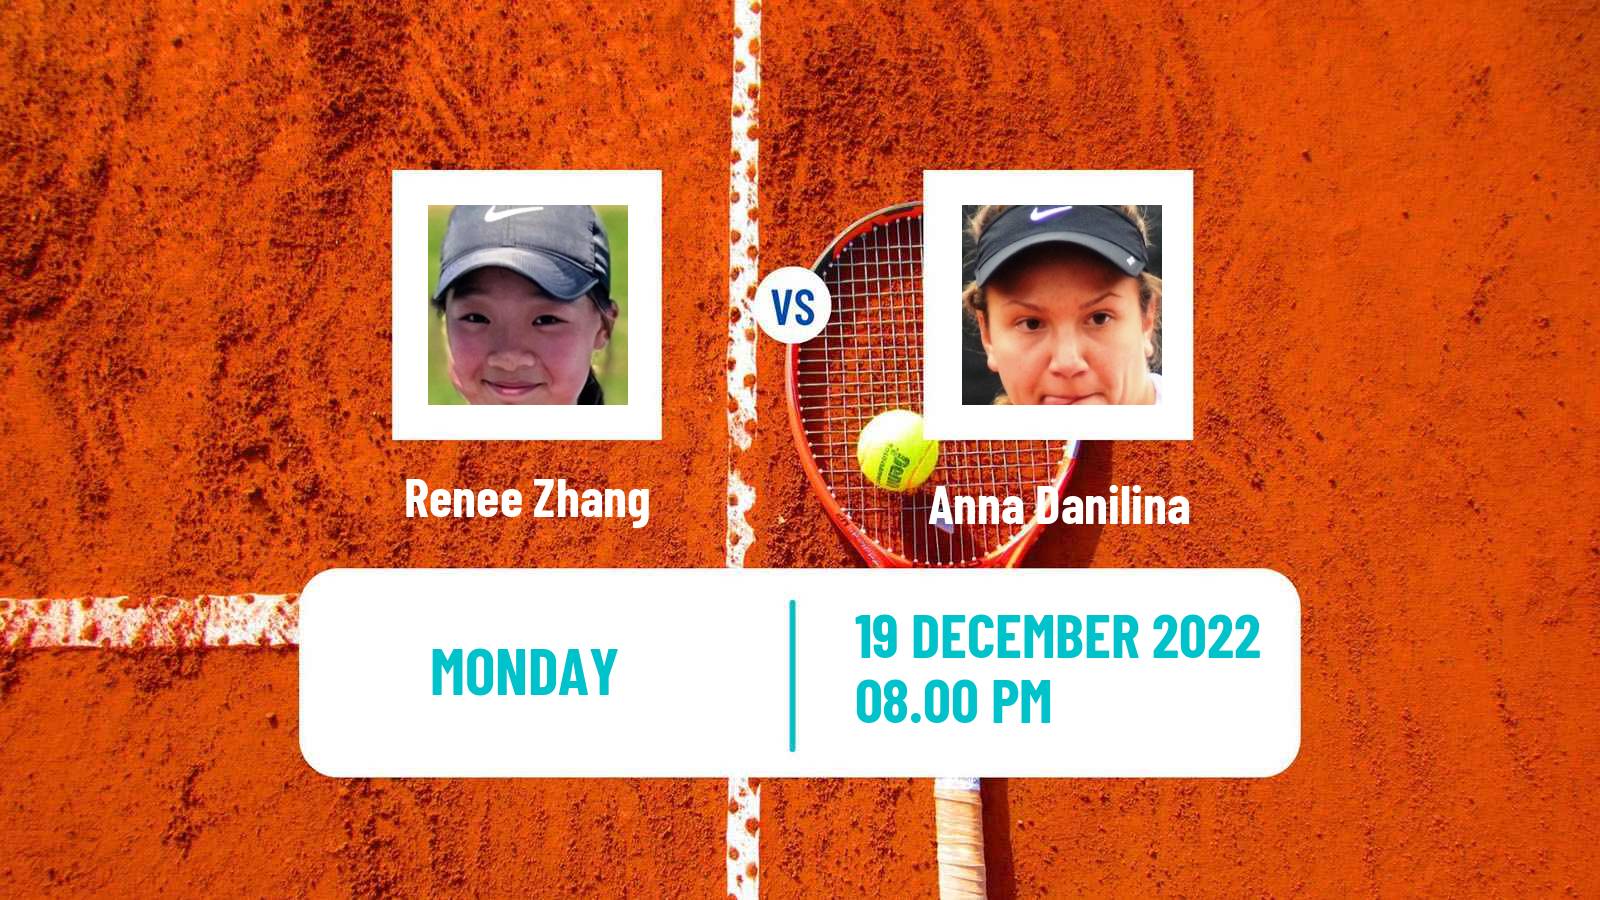 Tennis ITF Tournaments Renee Zhang - Anna Danilina